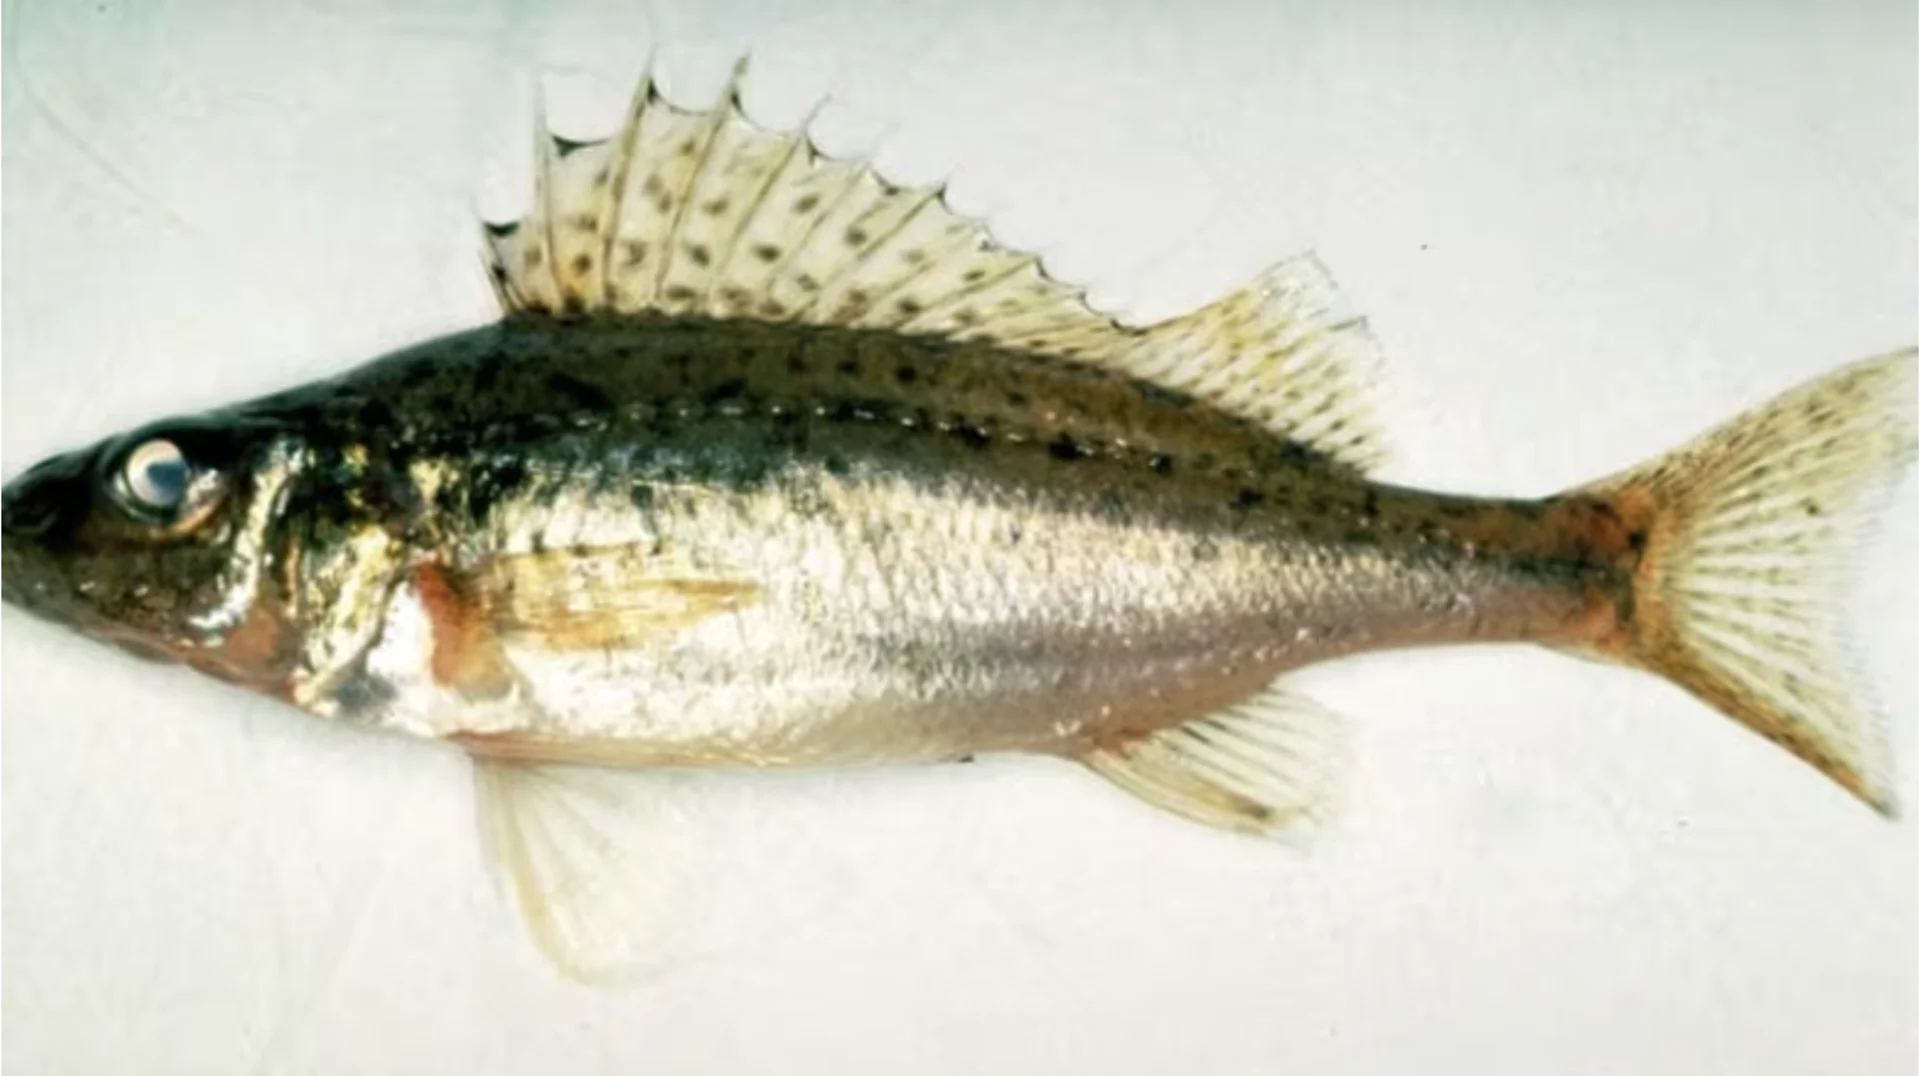 'Very aggressive competitors': New invasive fish detected in Ontario